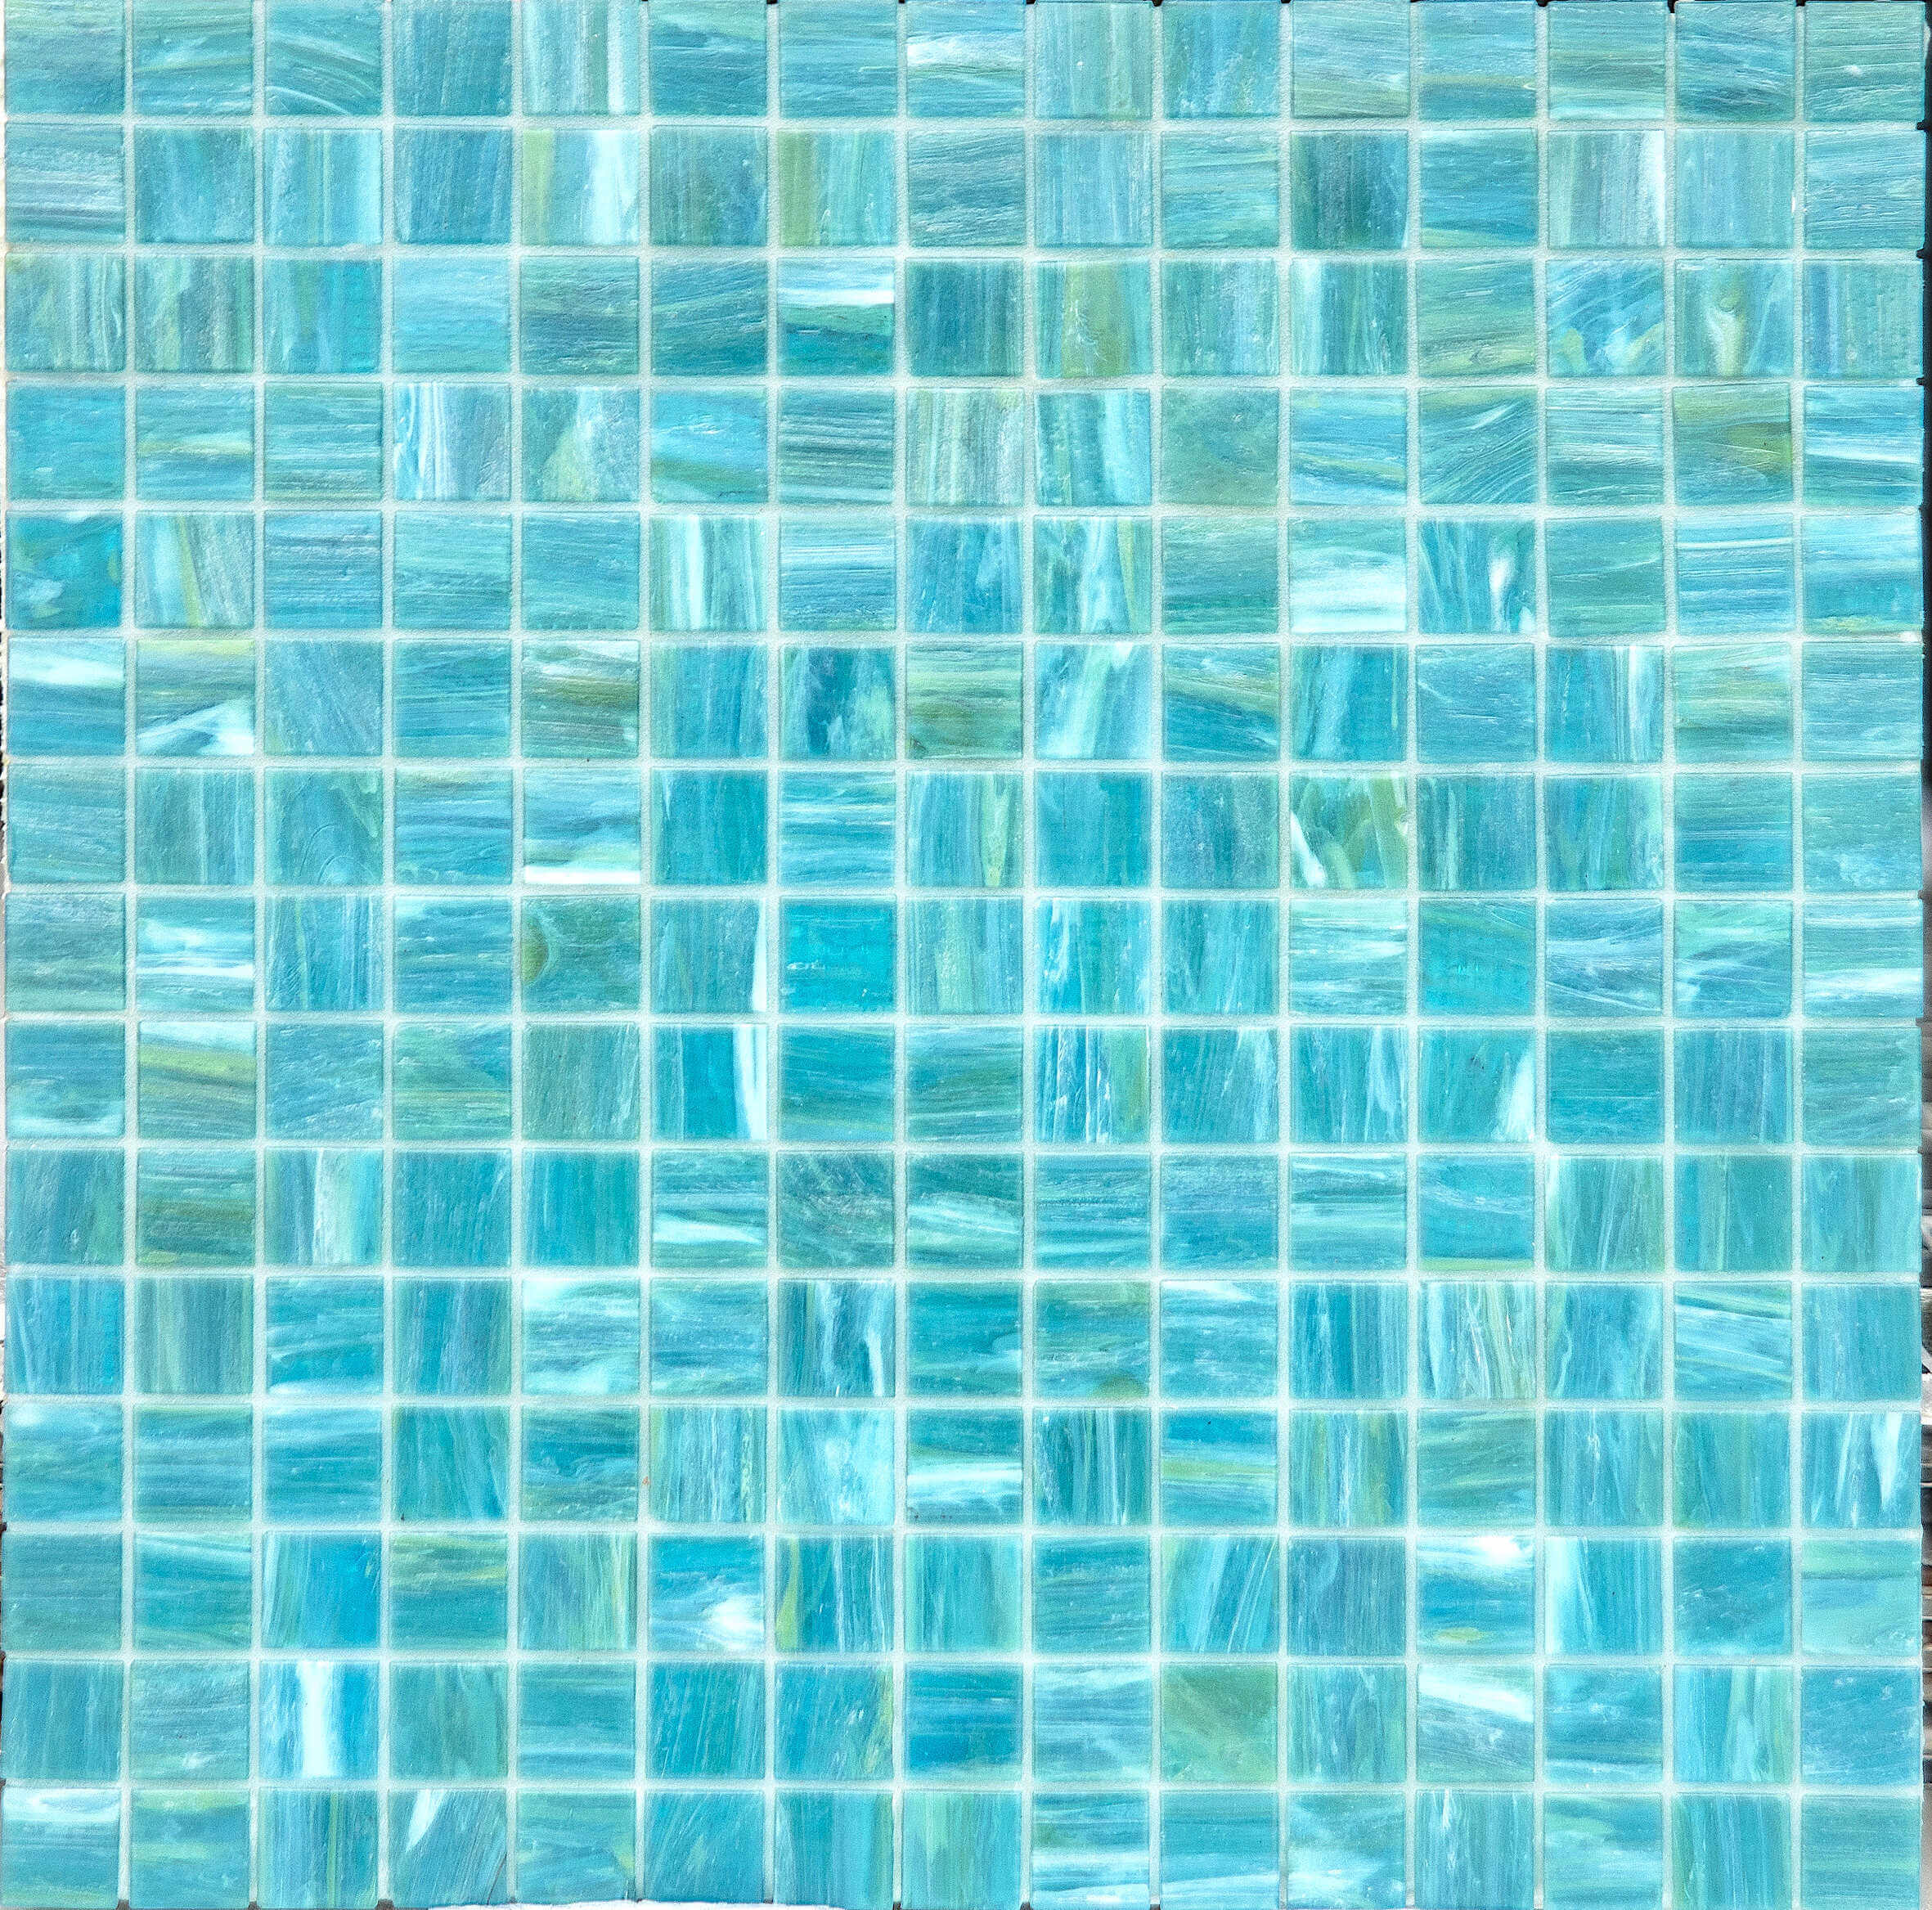 pool mosaic tiles, pool tiles, swimming pool tiles, mosaic pool tiles, pool tiles mosaic, pool tiles sydney, pool tiles glass, trend pool tiles, bisazza pool tiles